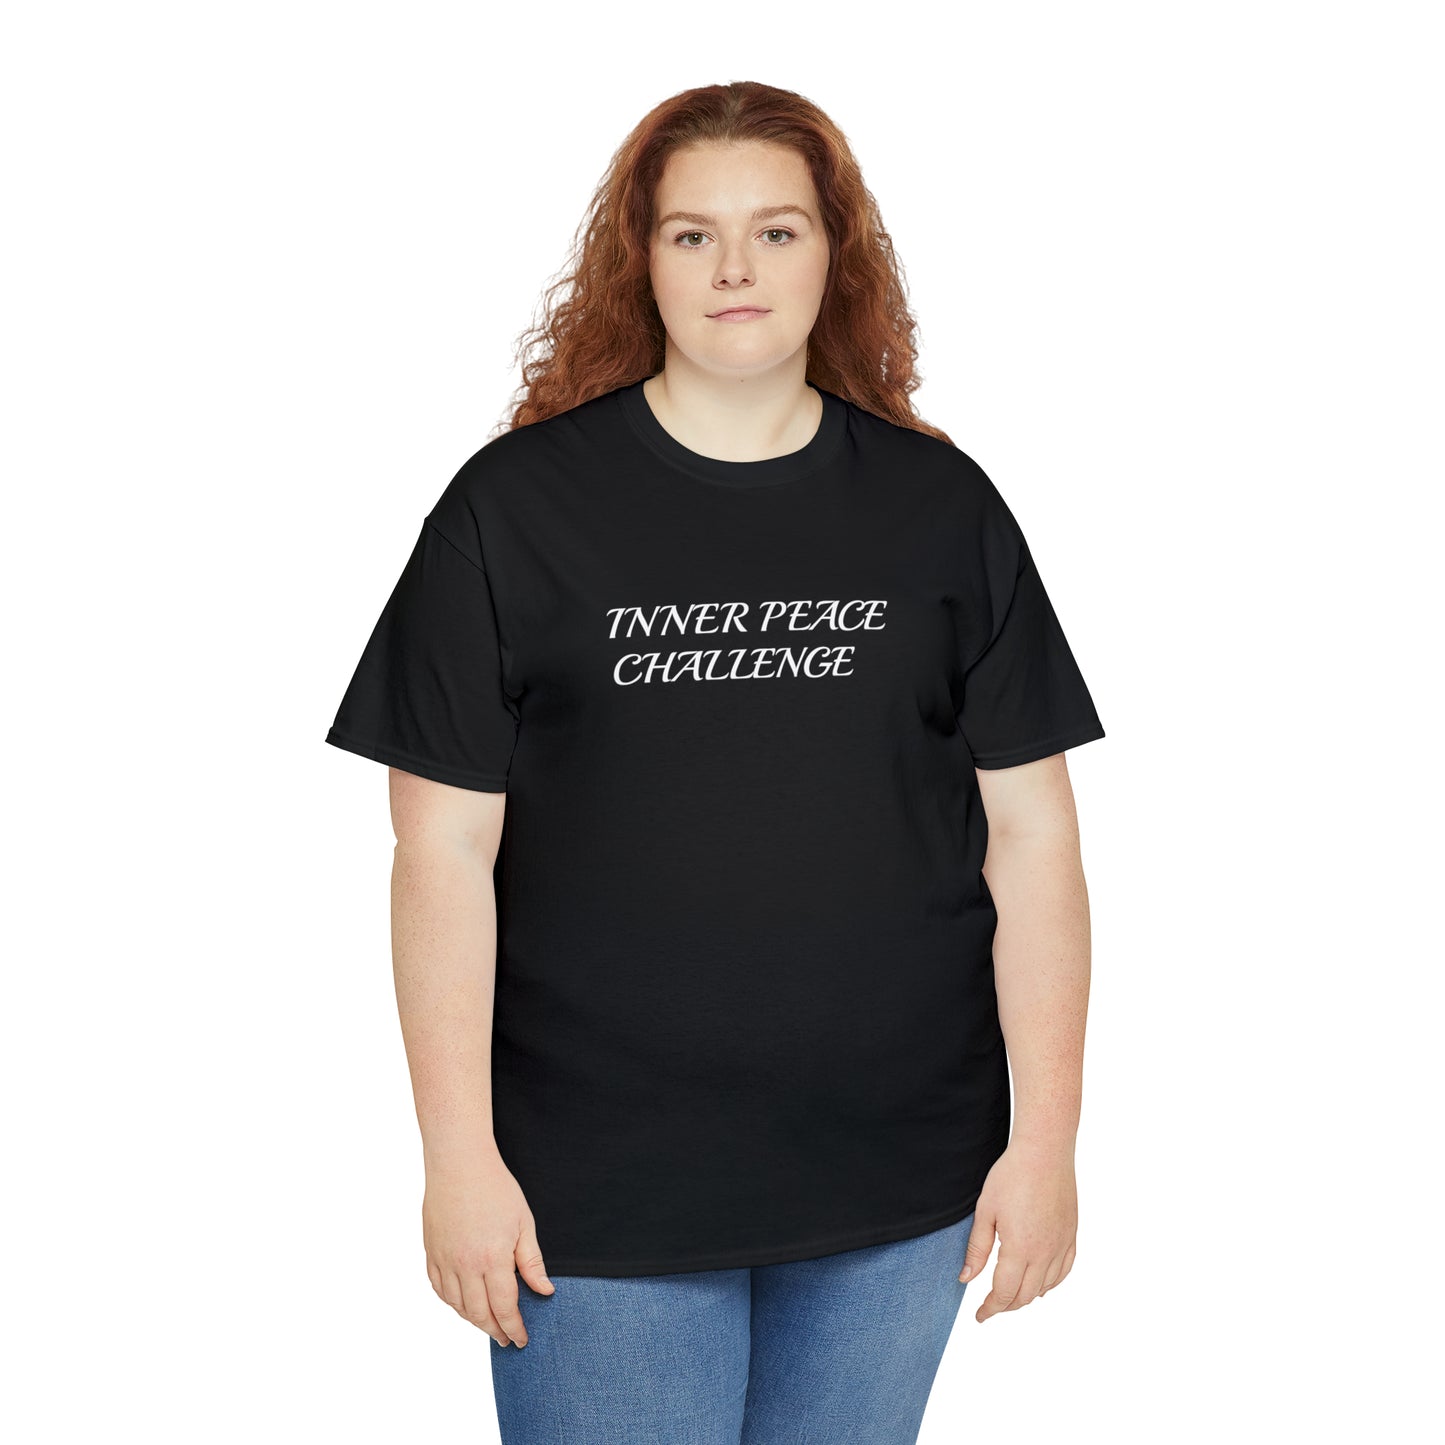 Inner peace challenge shirt